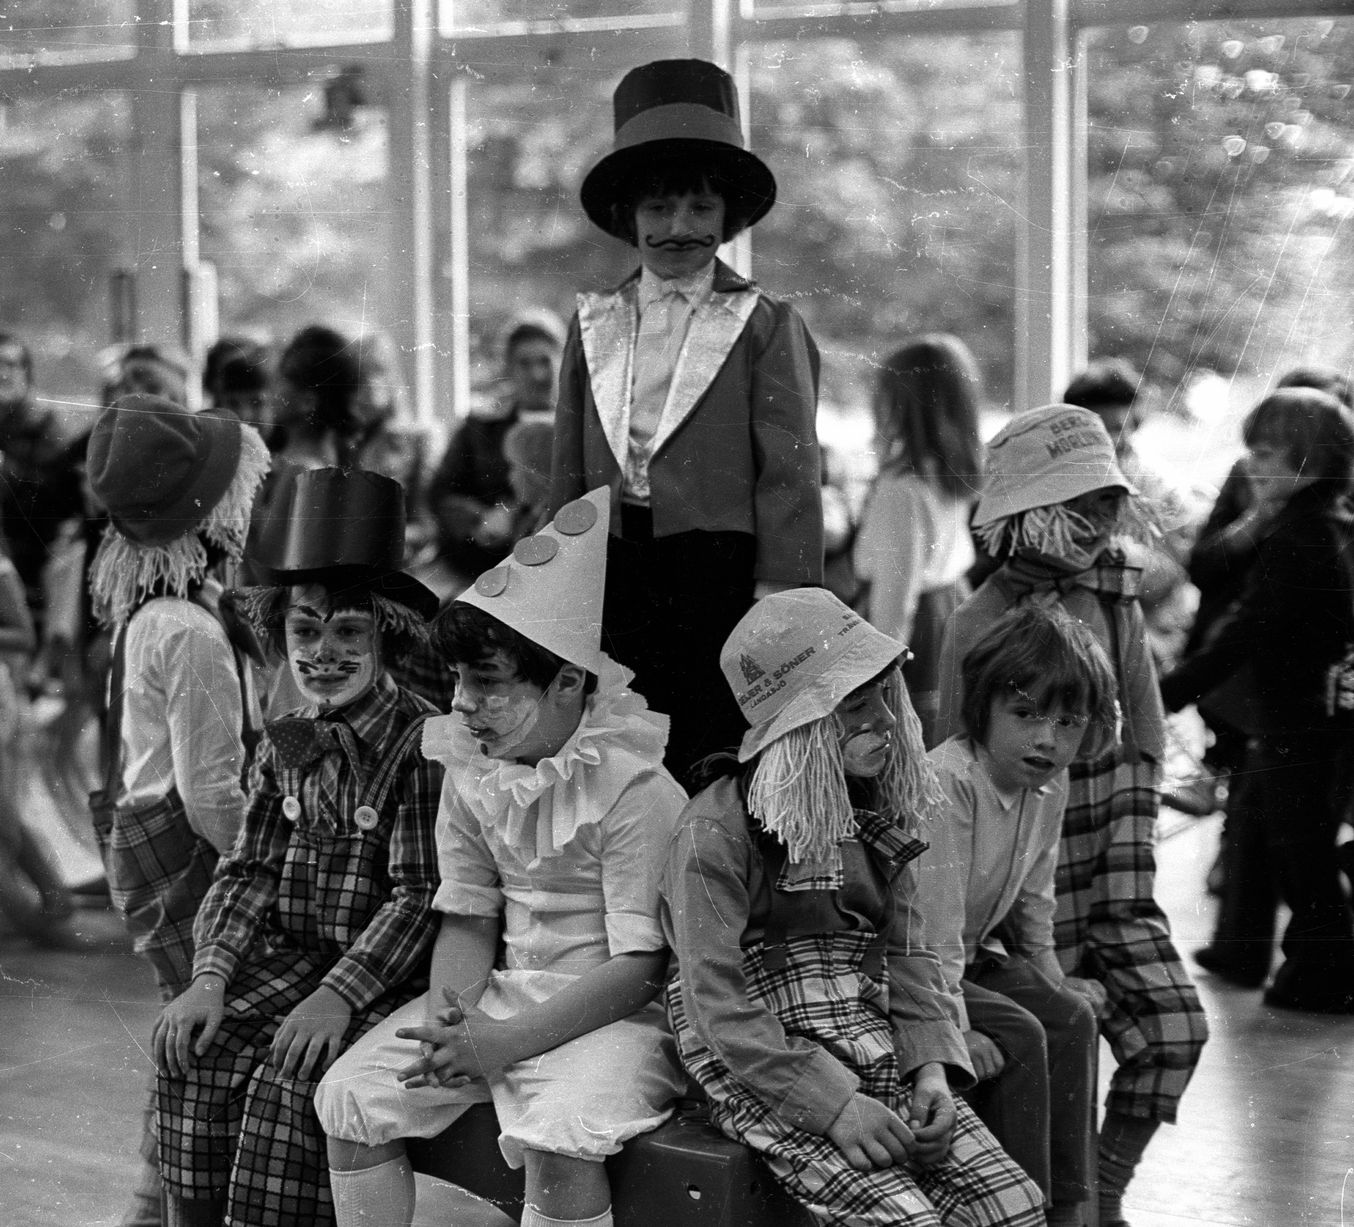 Brunswick Infants School in Cambridge Circus